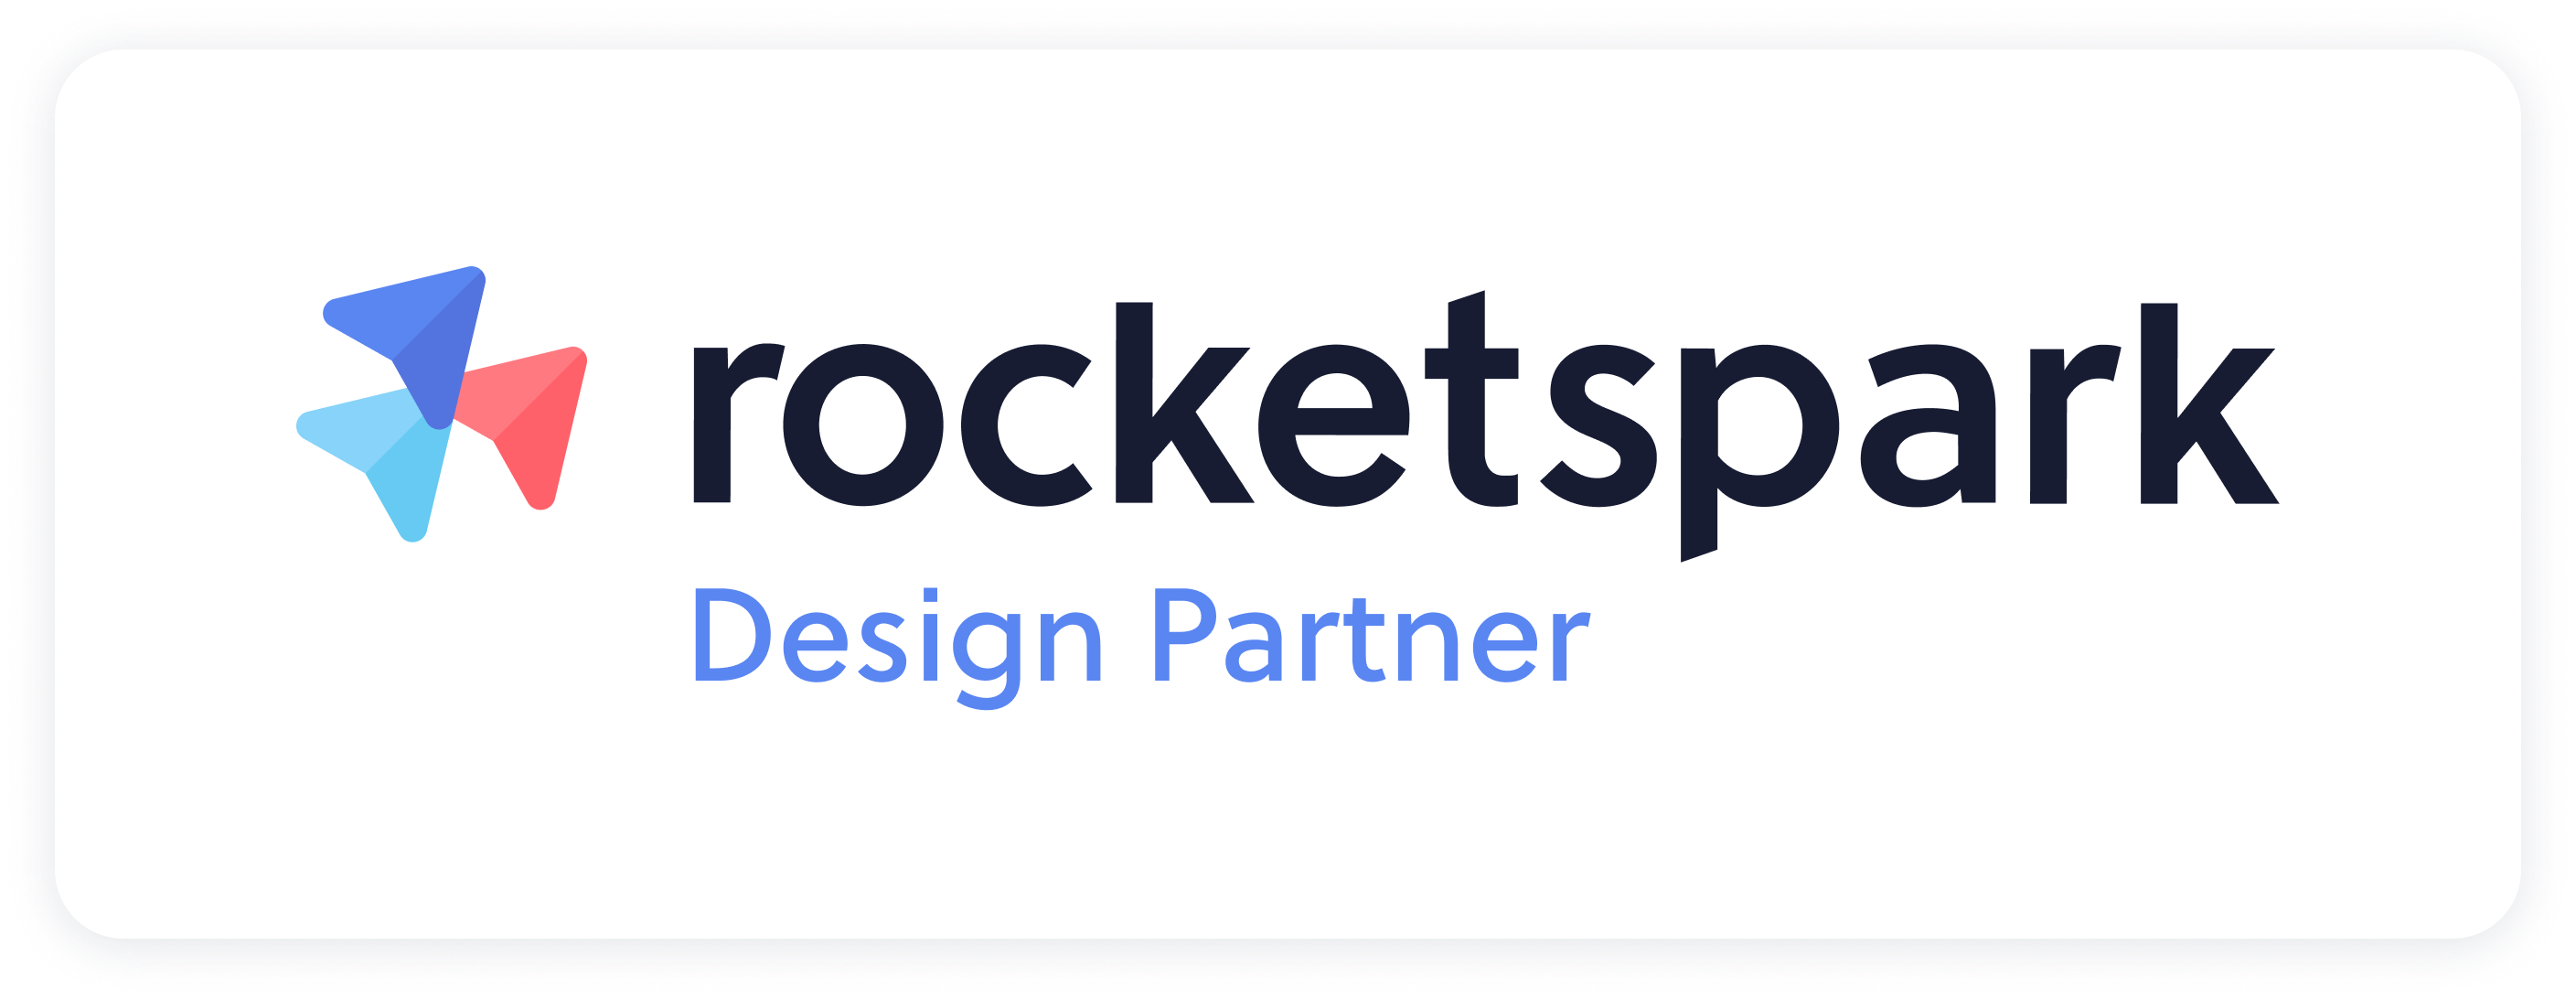 Rocketspark Design Partner